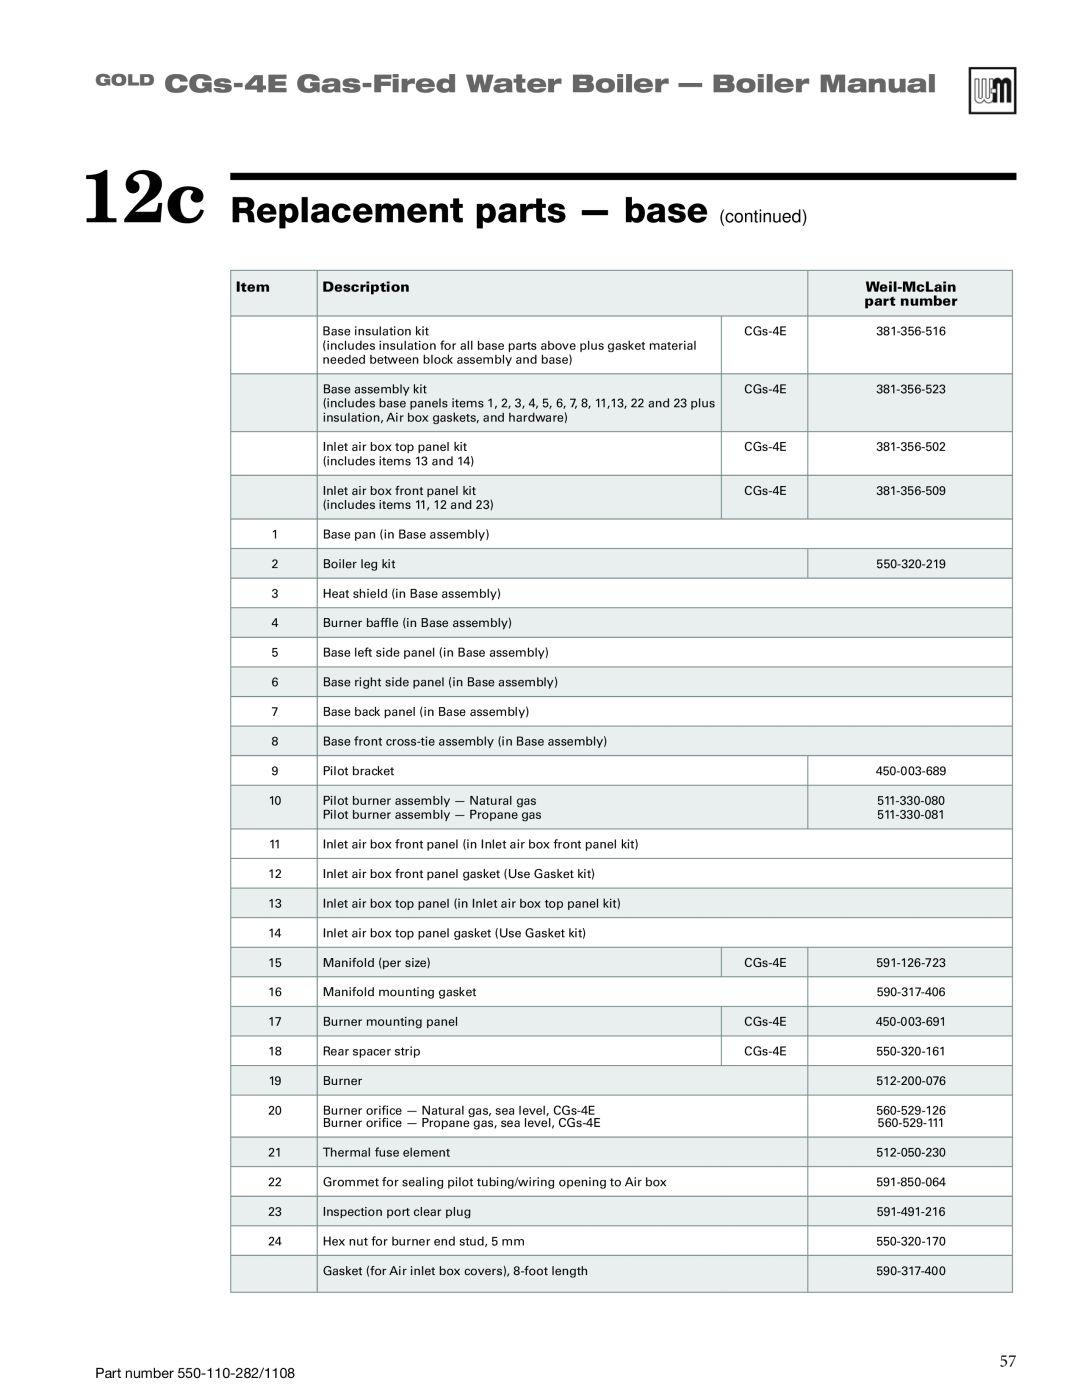 Weil-McLain CGS-4E 12c Replacement parts - base continued, GOLD CGs-4E Gas-FiredWater Boiler — Boiler Manual, Description 